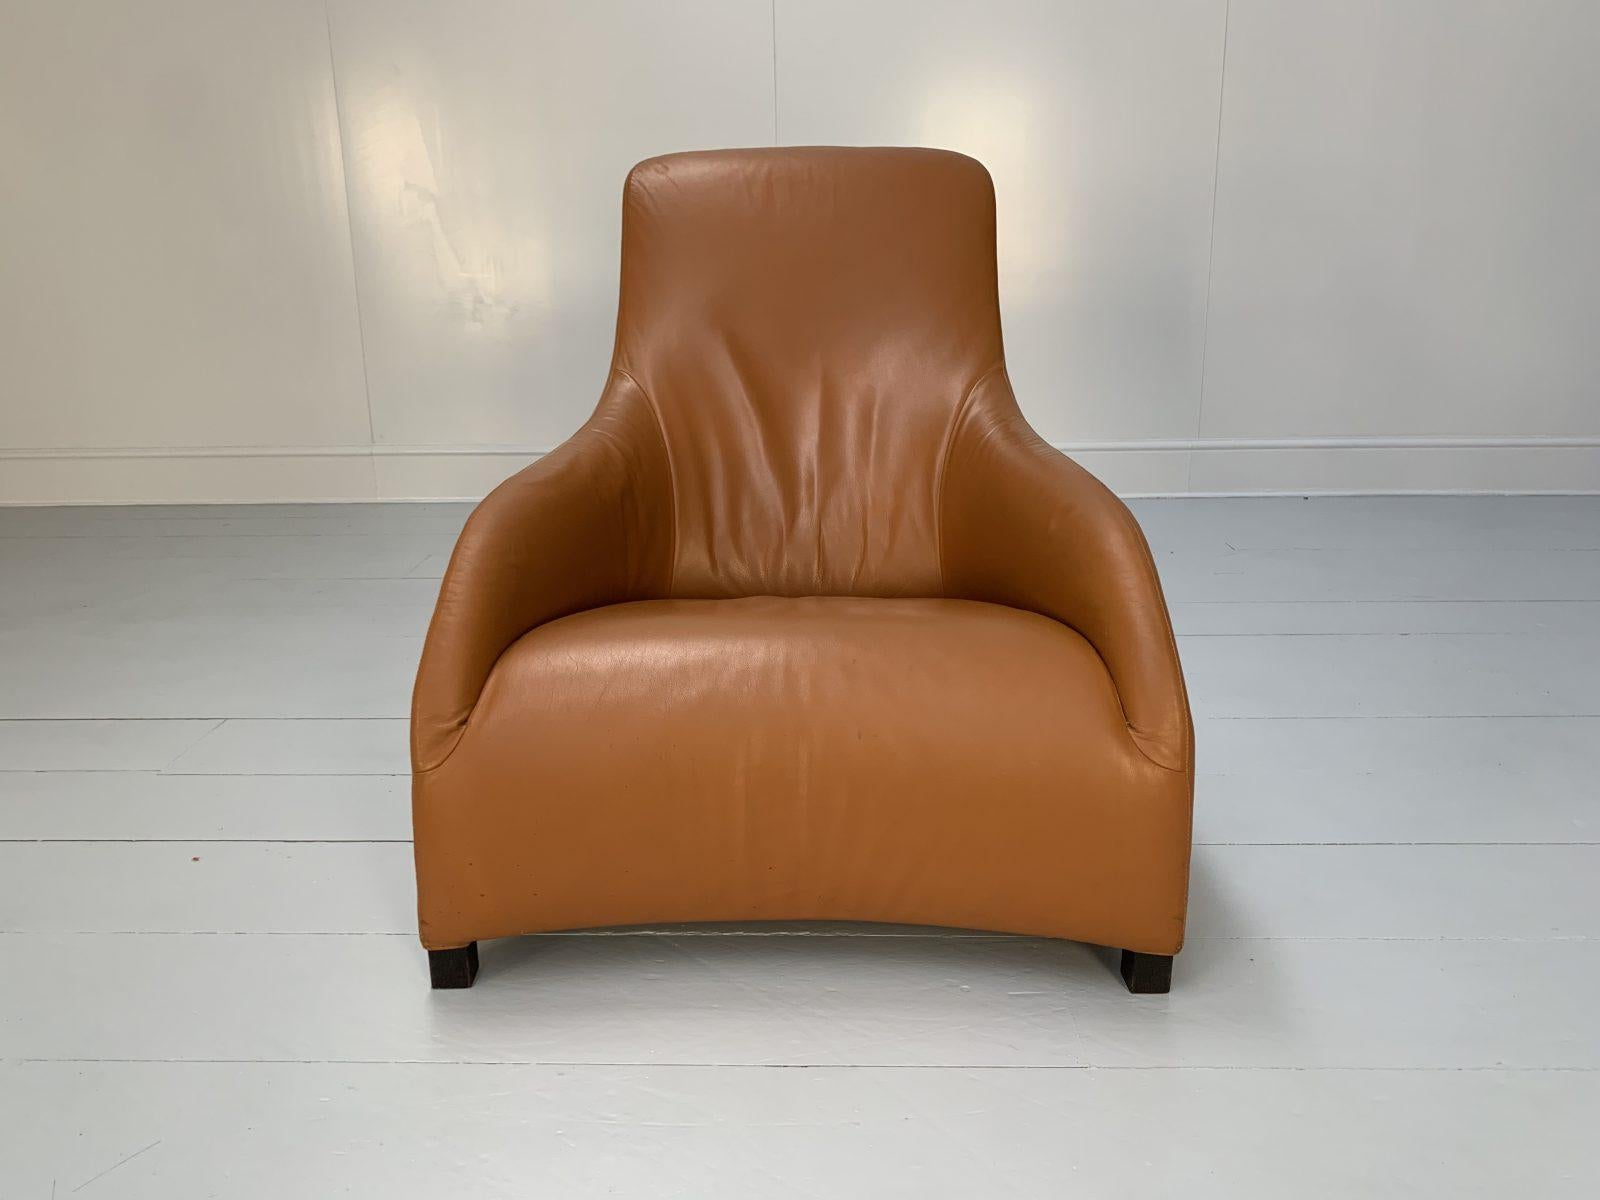 B&B Italia Armchairs – “MAXALTO KALOS 9750” – In Tan Brown “ALFA” Leather  For Sale 2